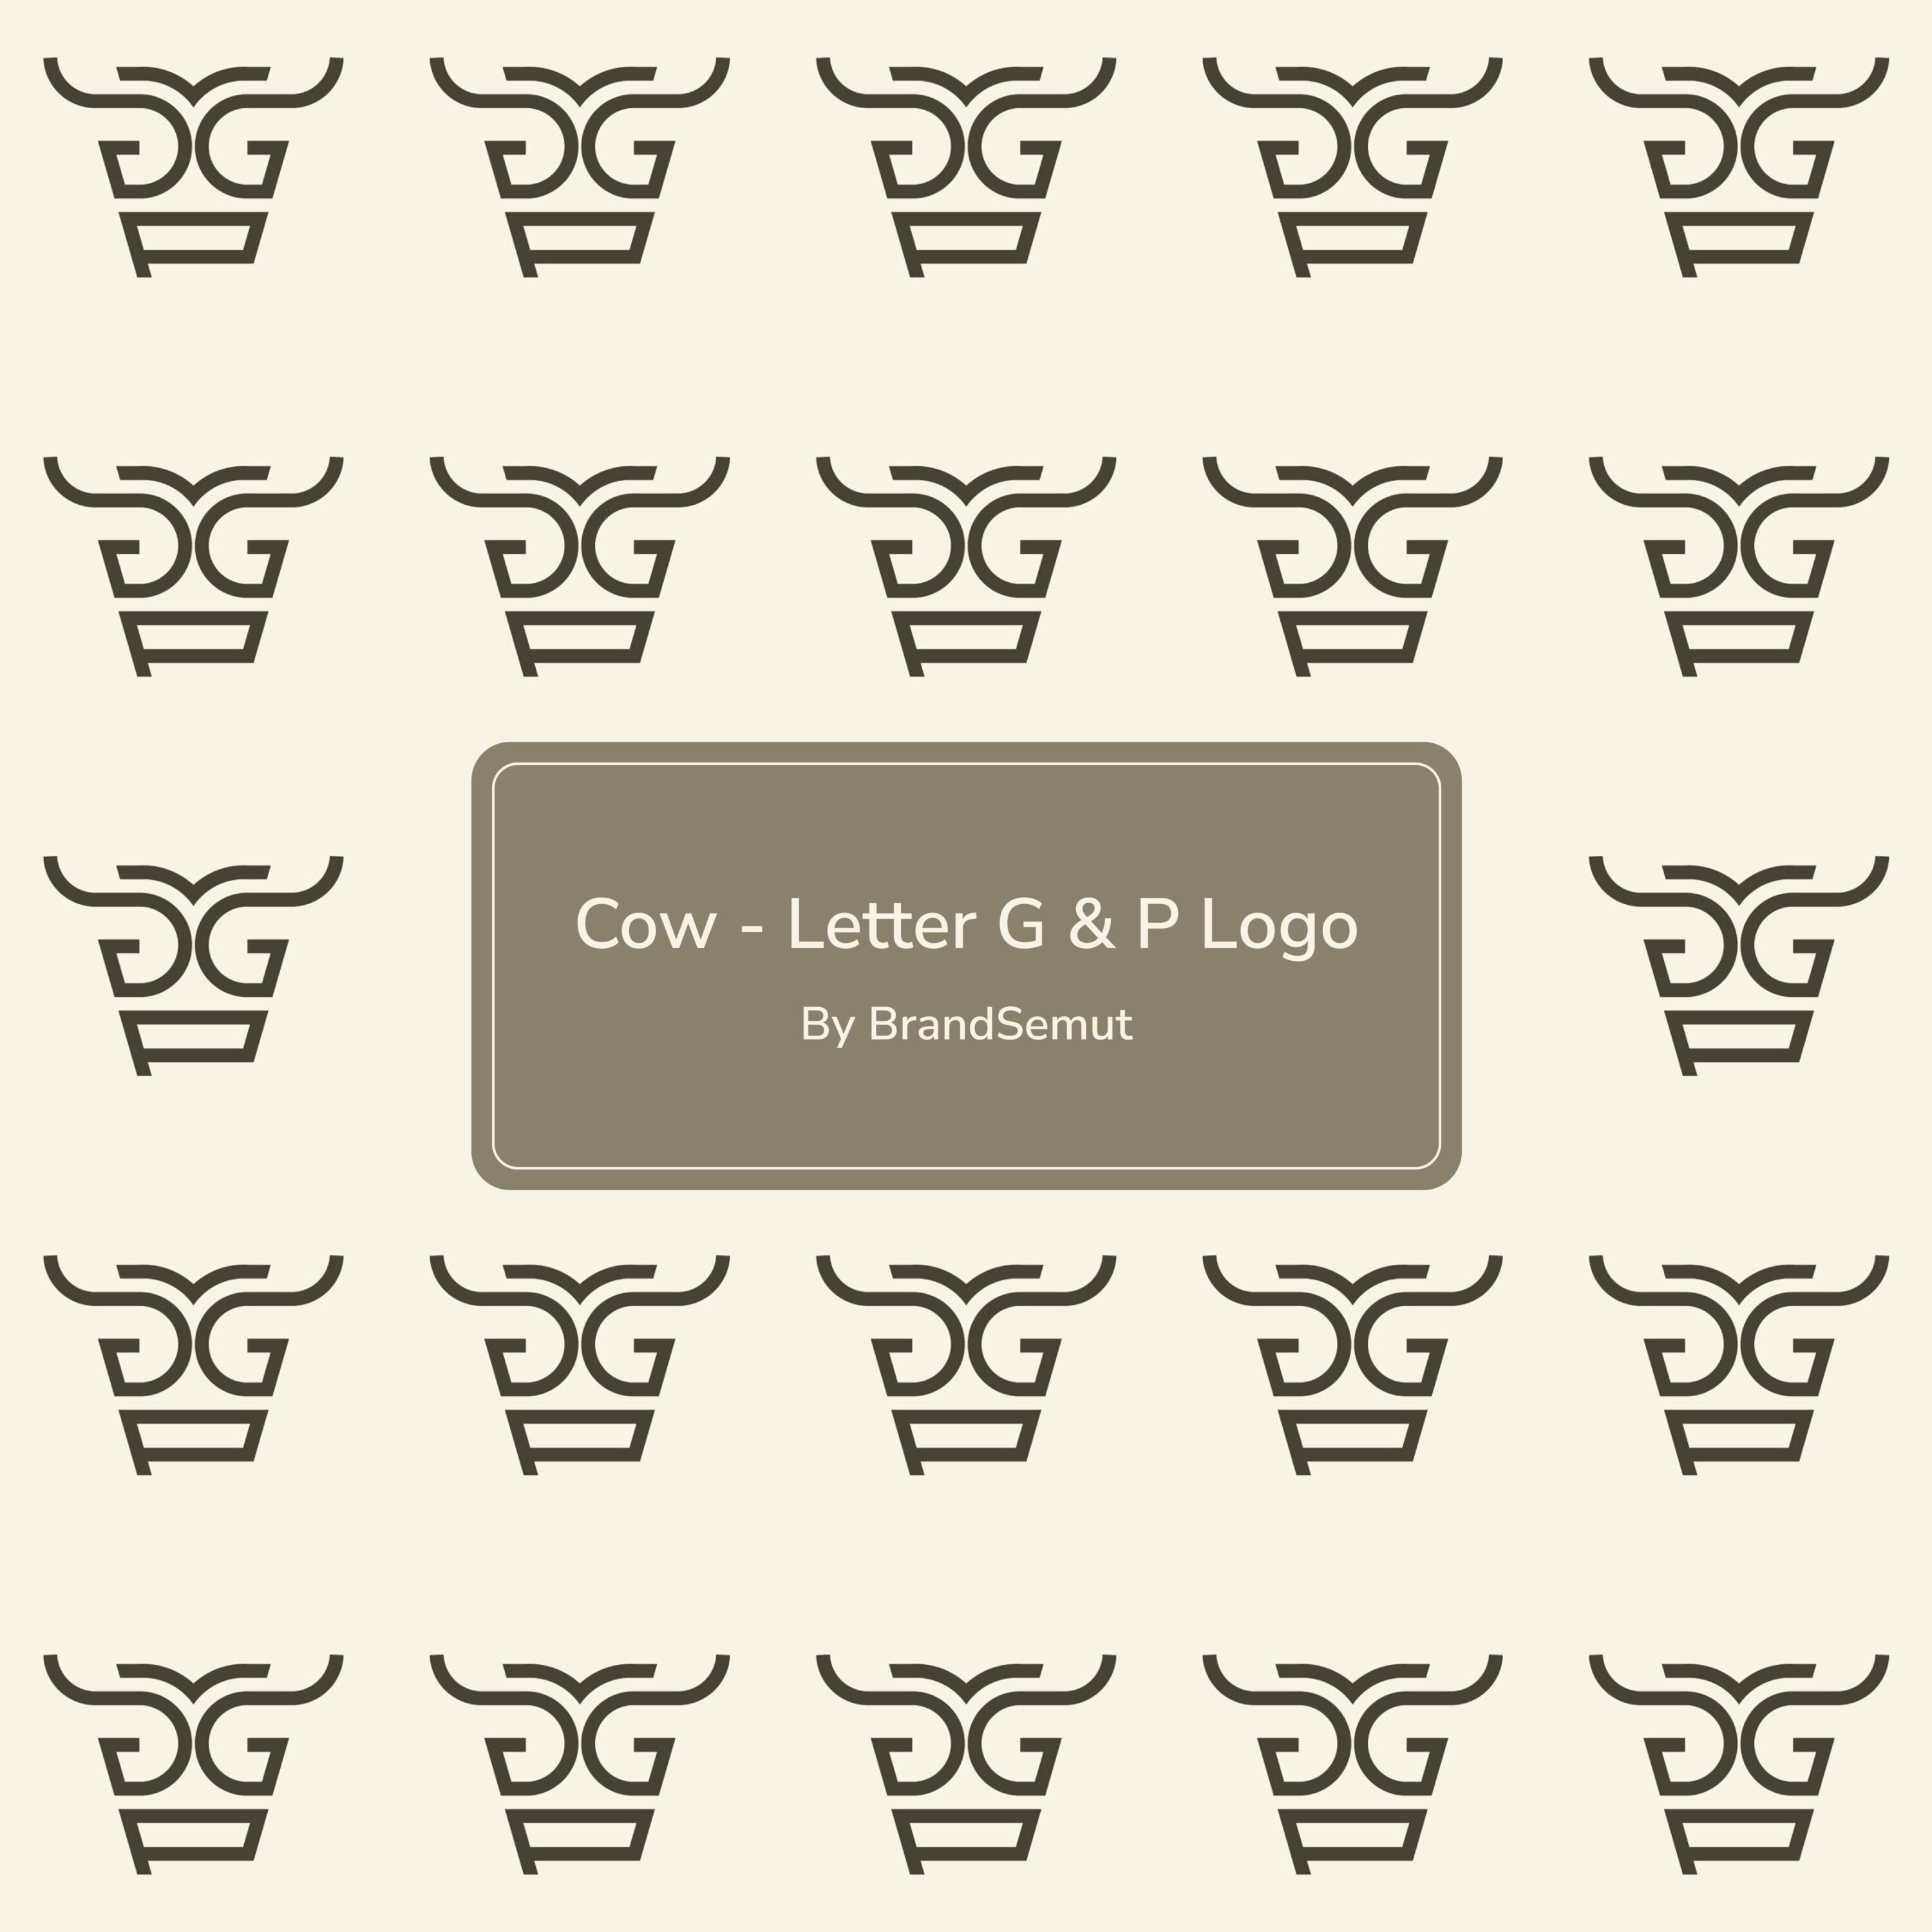 Cow - Letter G & P Logo.